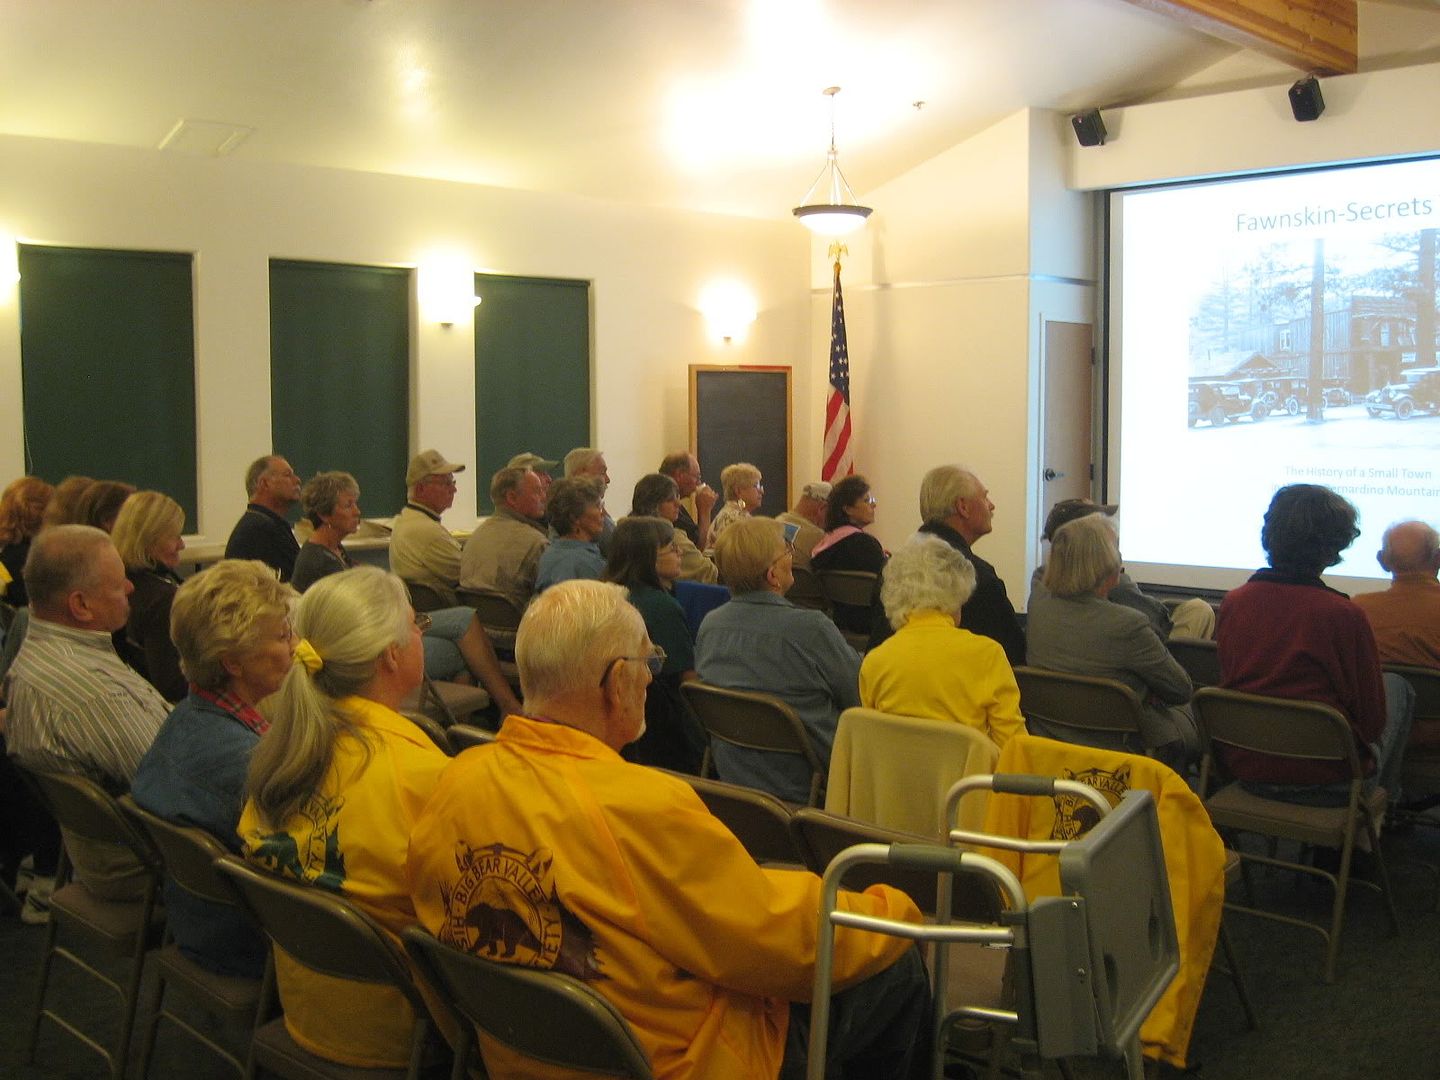 Big Bear Historical Society crowd for Fawnskin history.